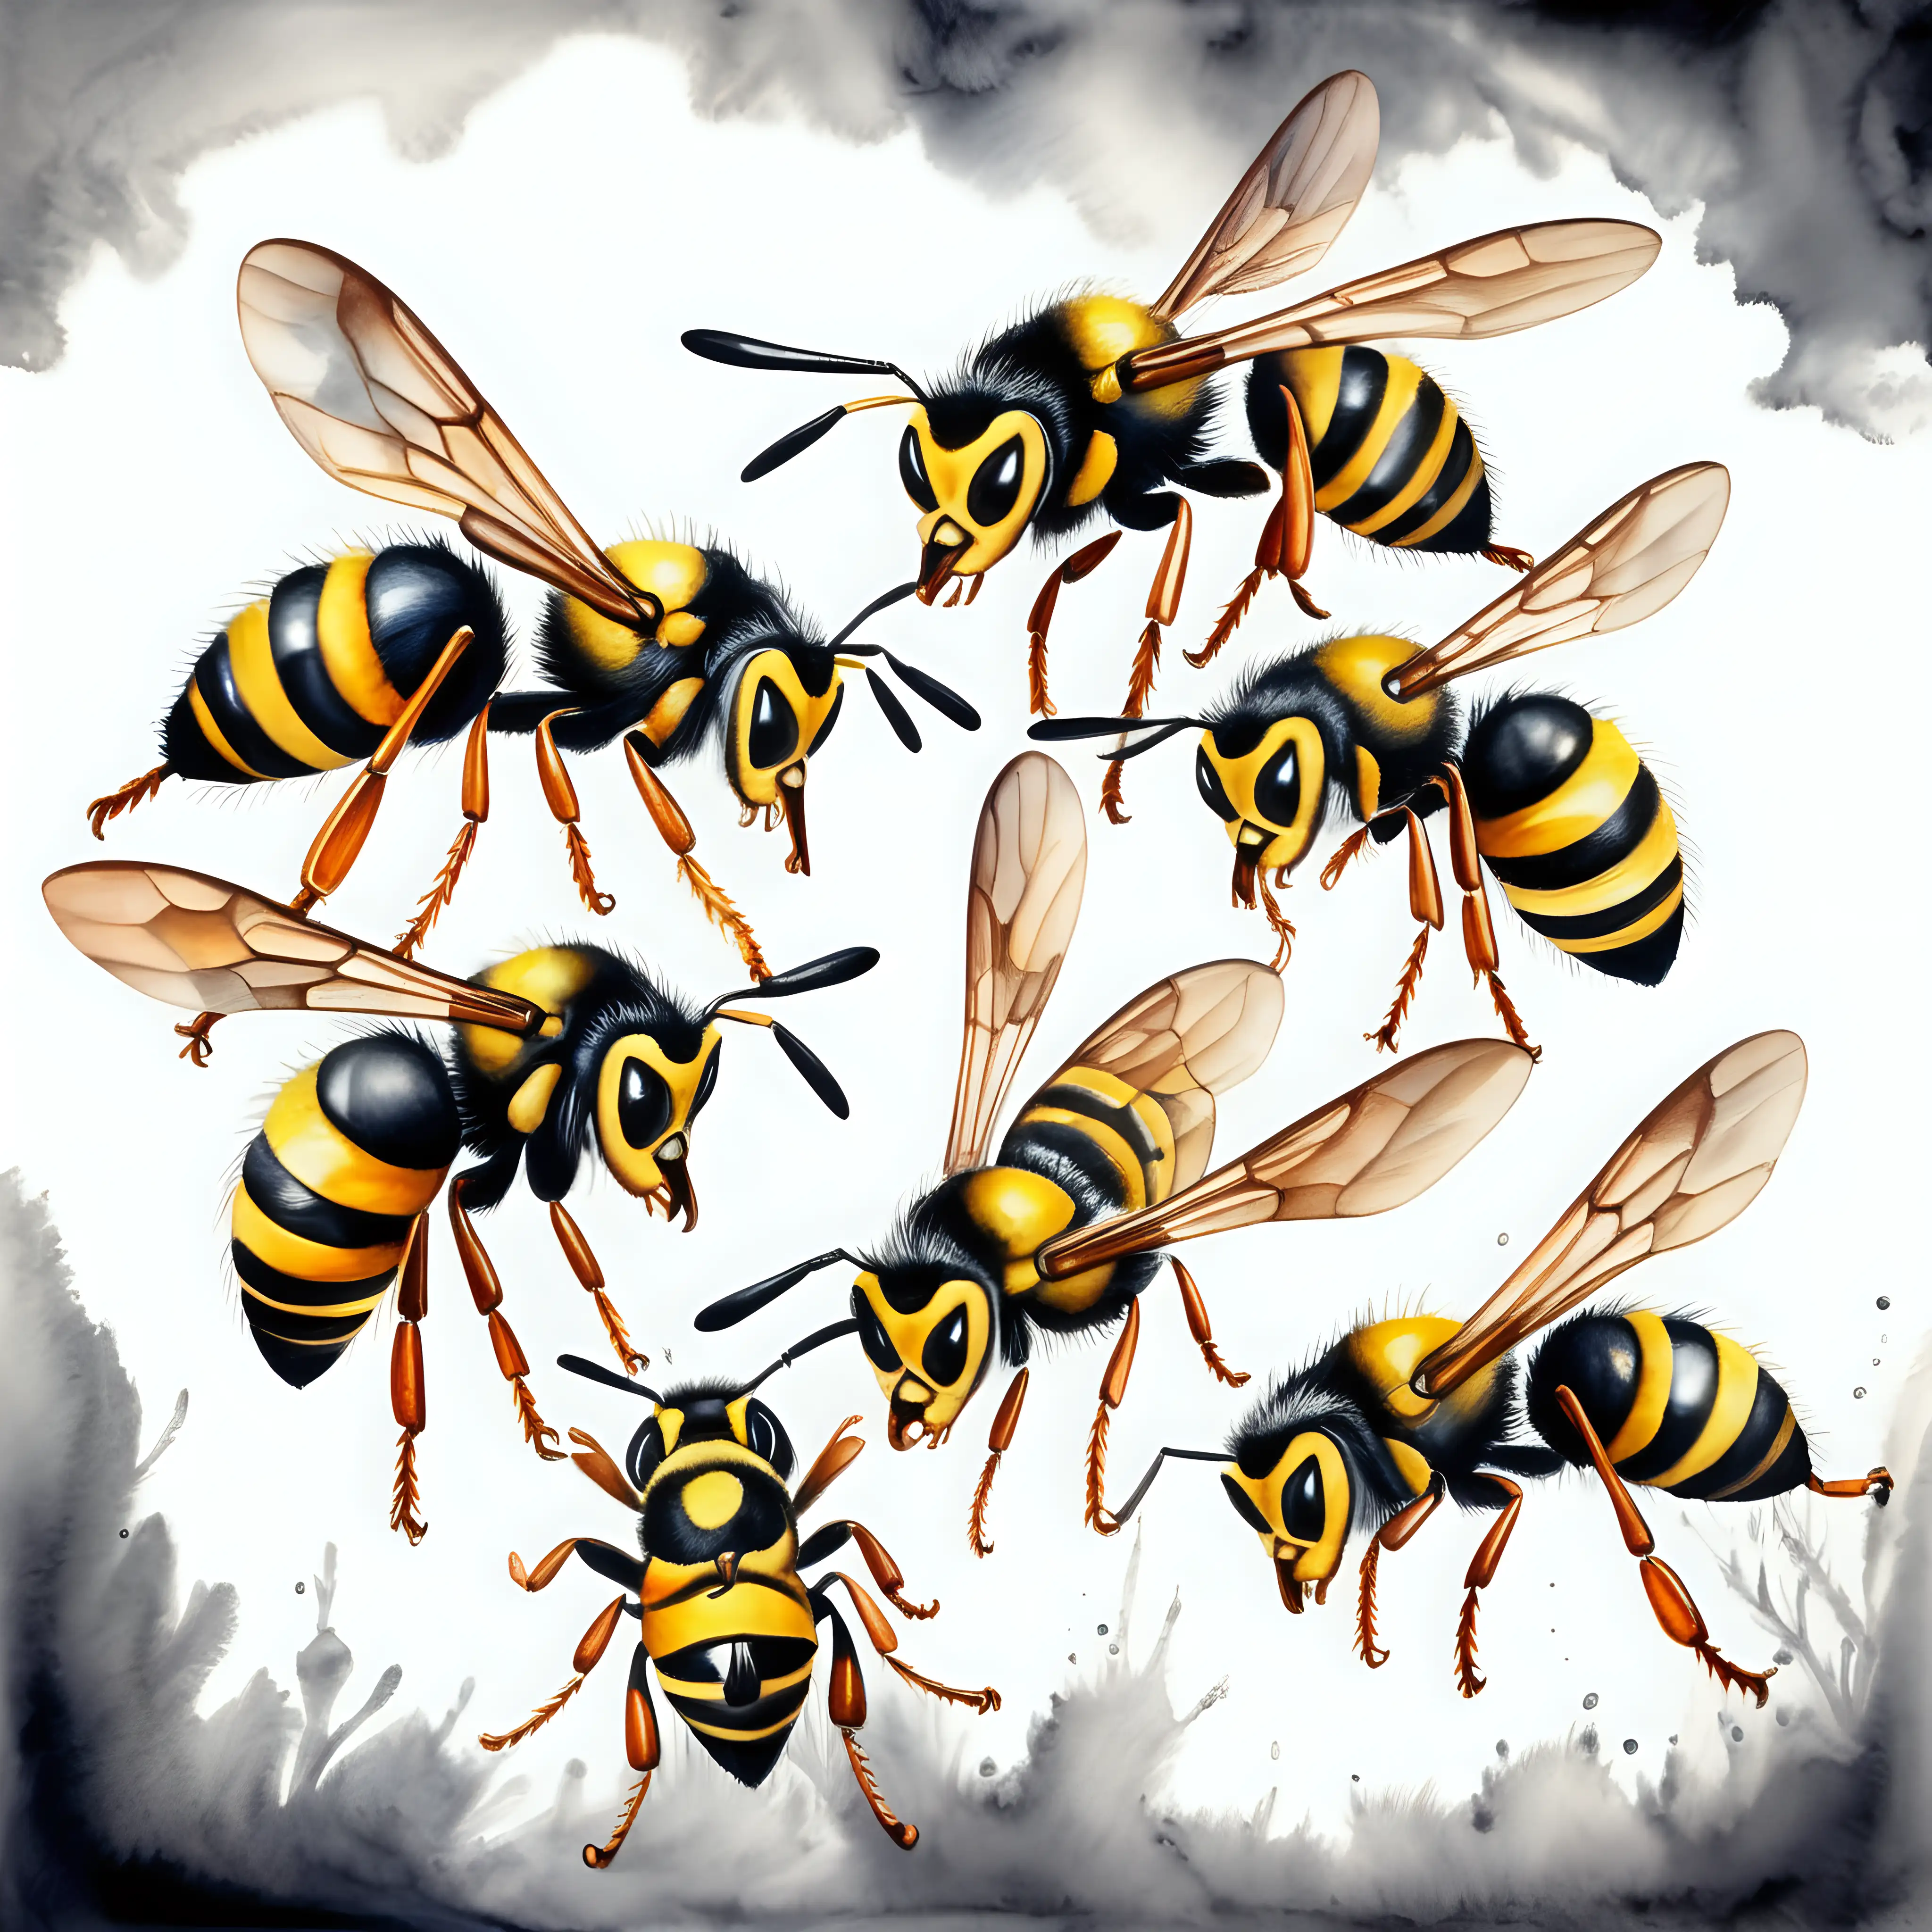 Intense Swarm of Wasp in Dark Watercolor Art